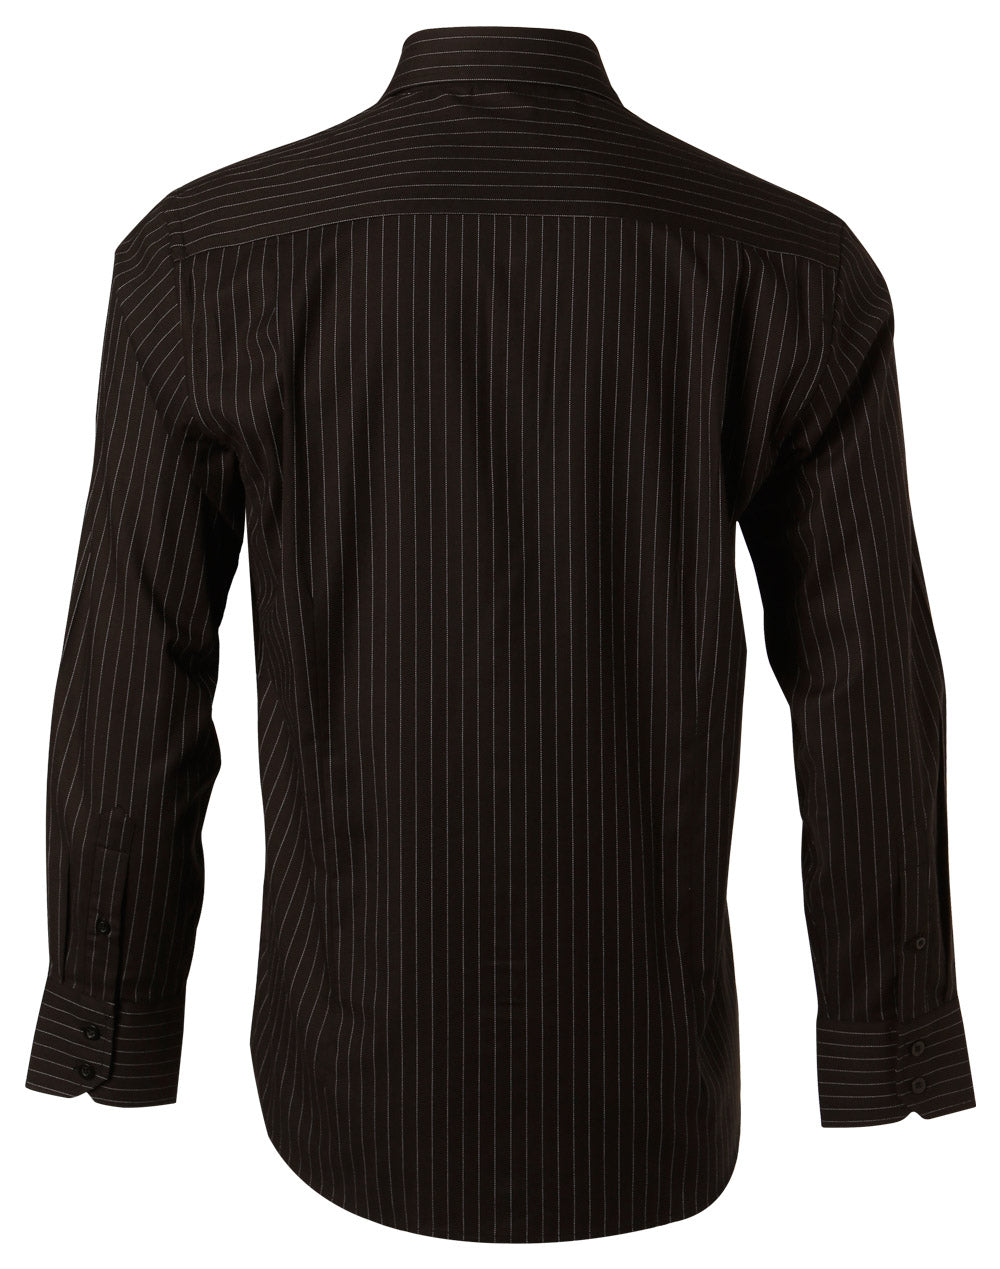 Winning Spirit -Men's Herringbone Pin Stripe Long Sleeve Shirt -BS17